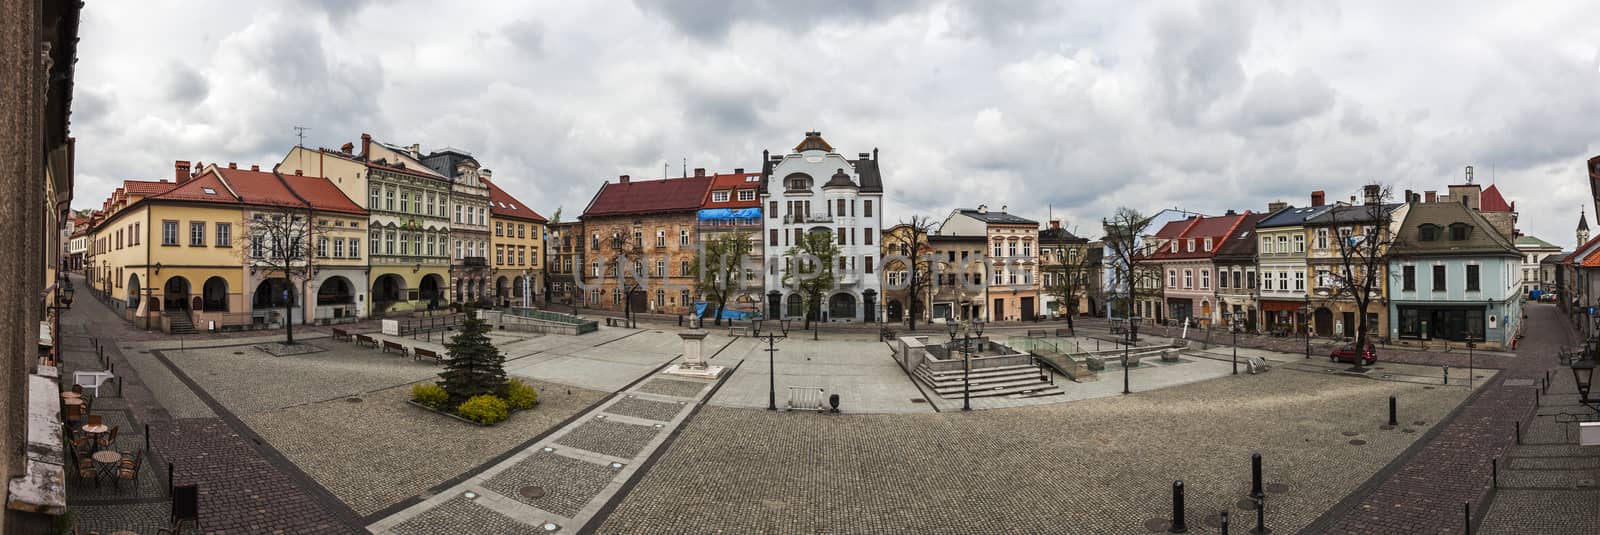 Main Square in Bielsko-Biala by benkrut